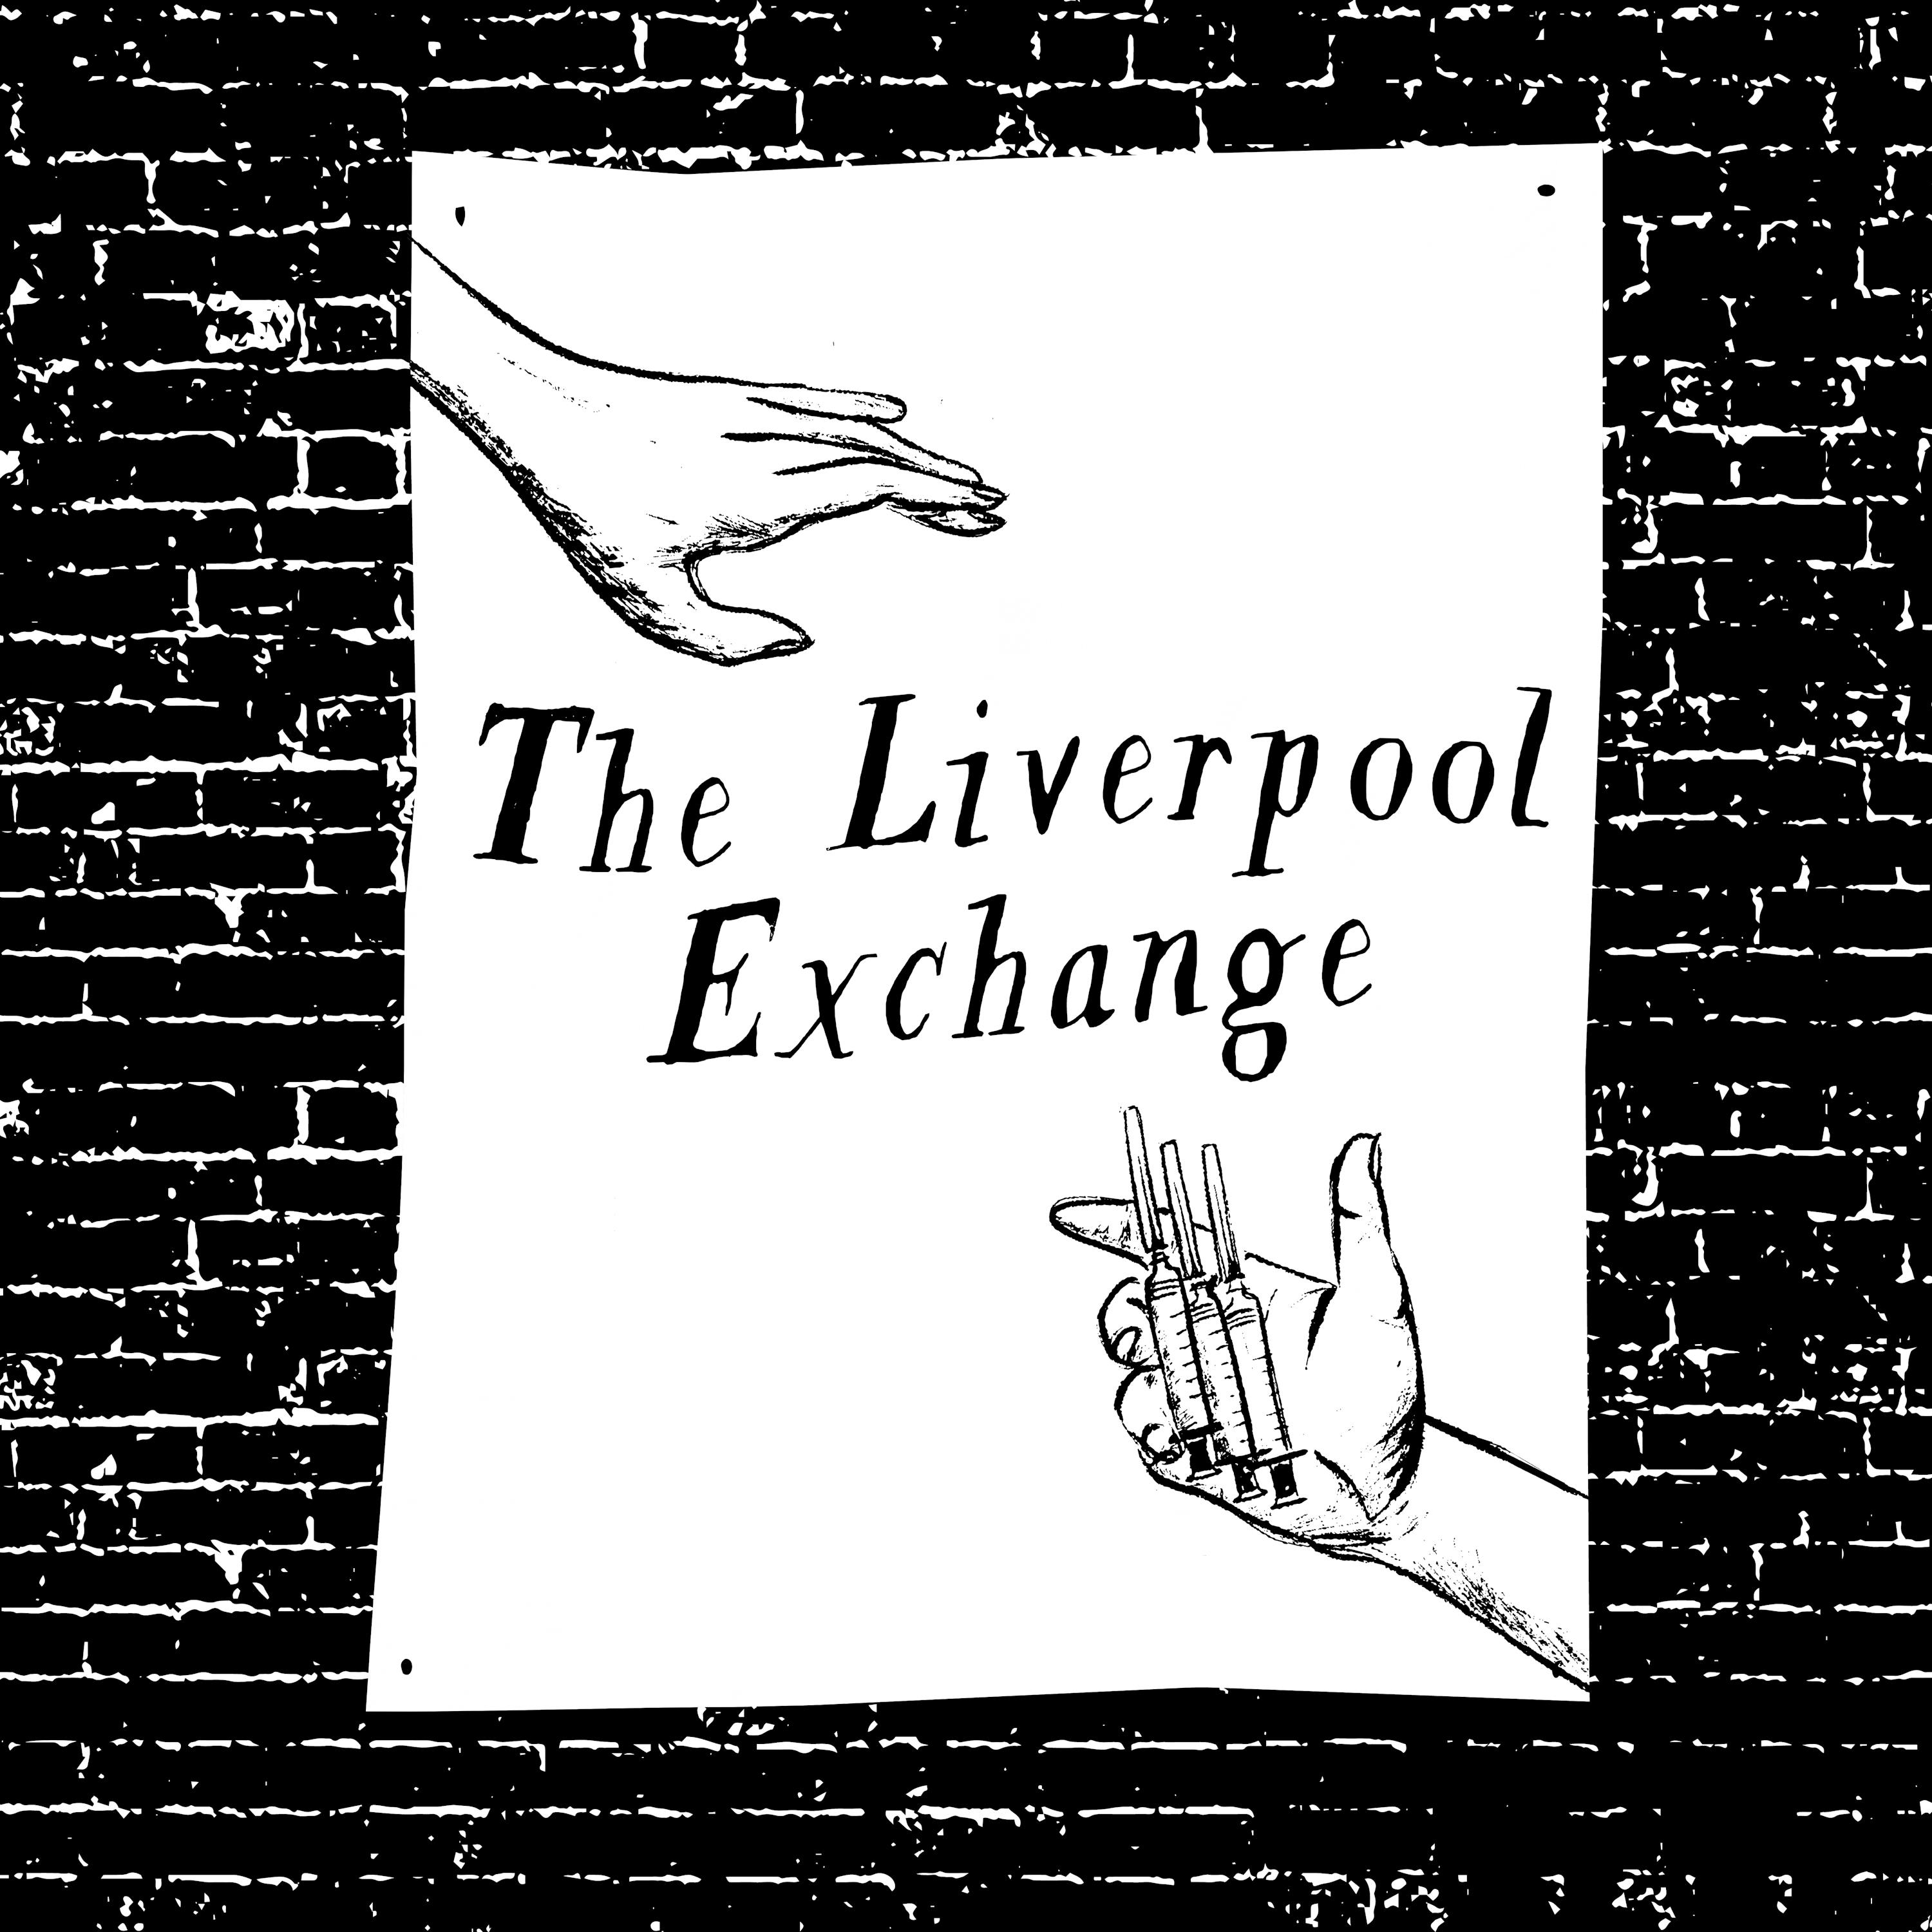 The Liverpool Exchange